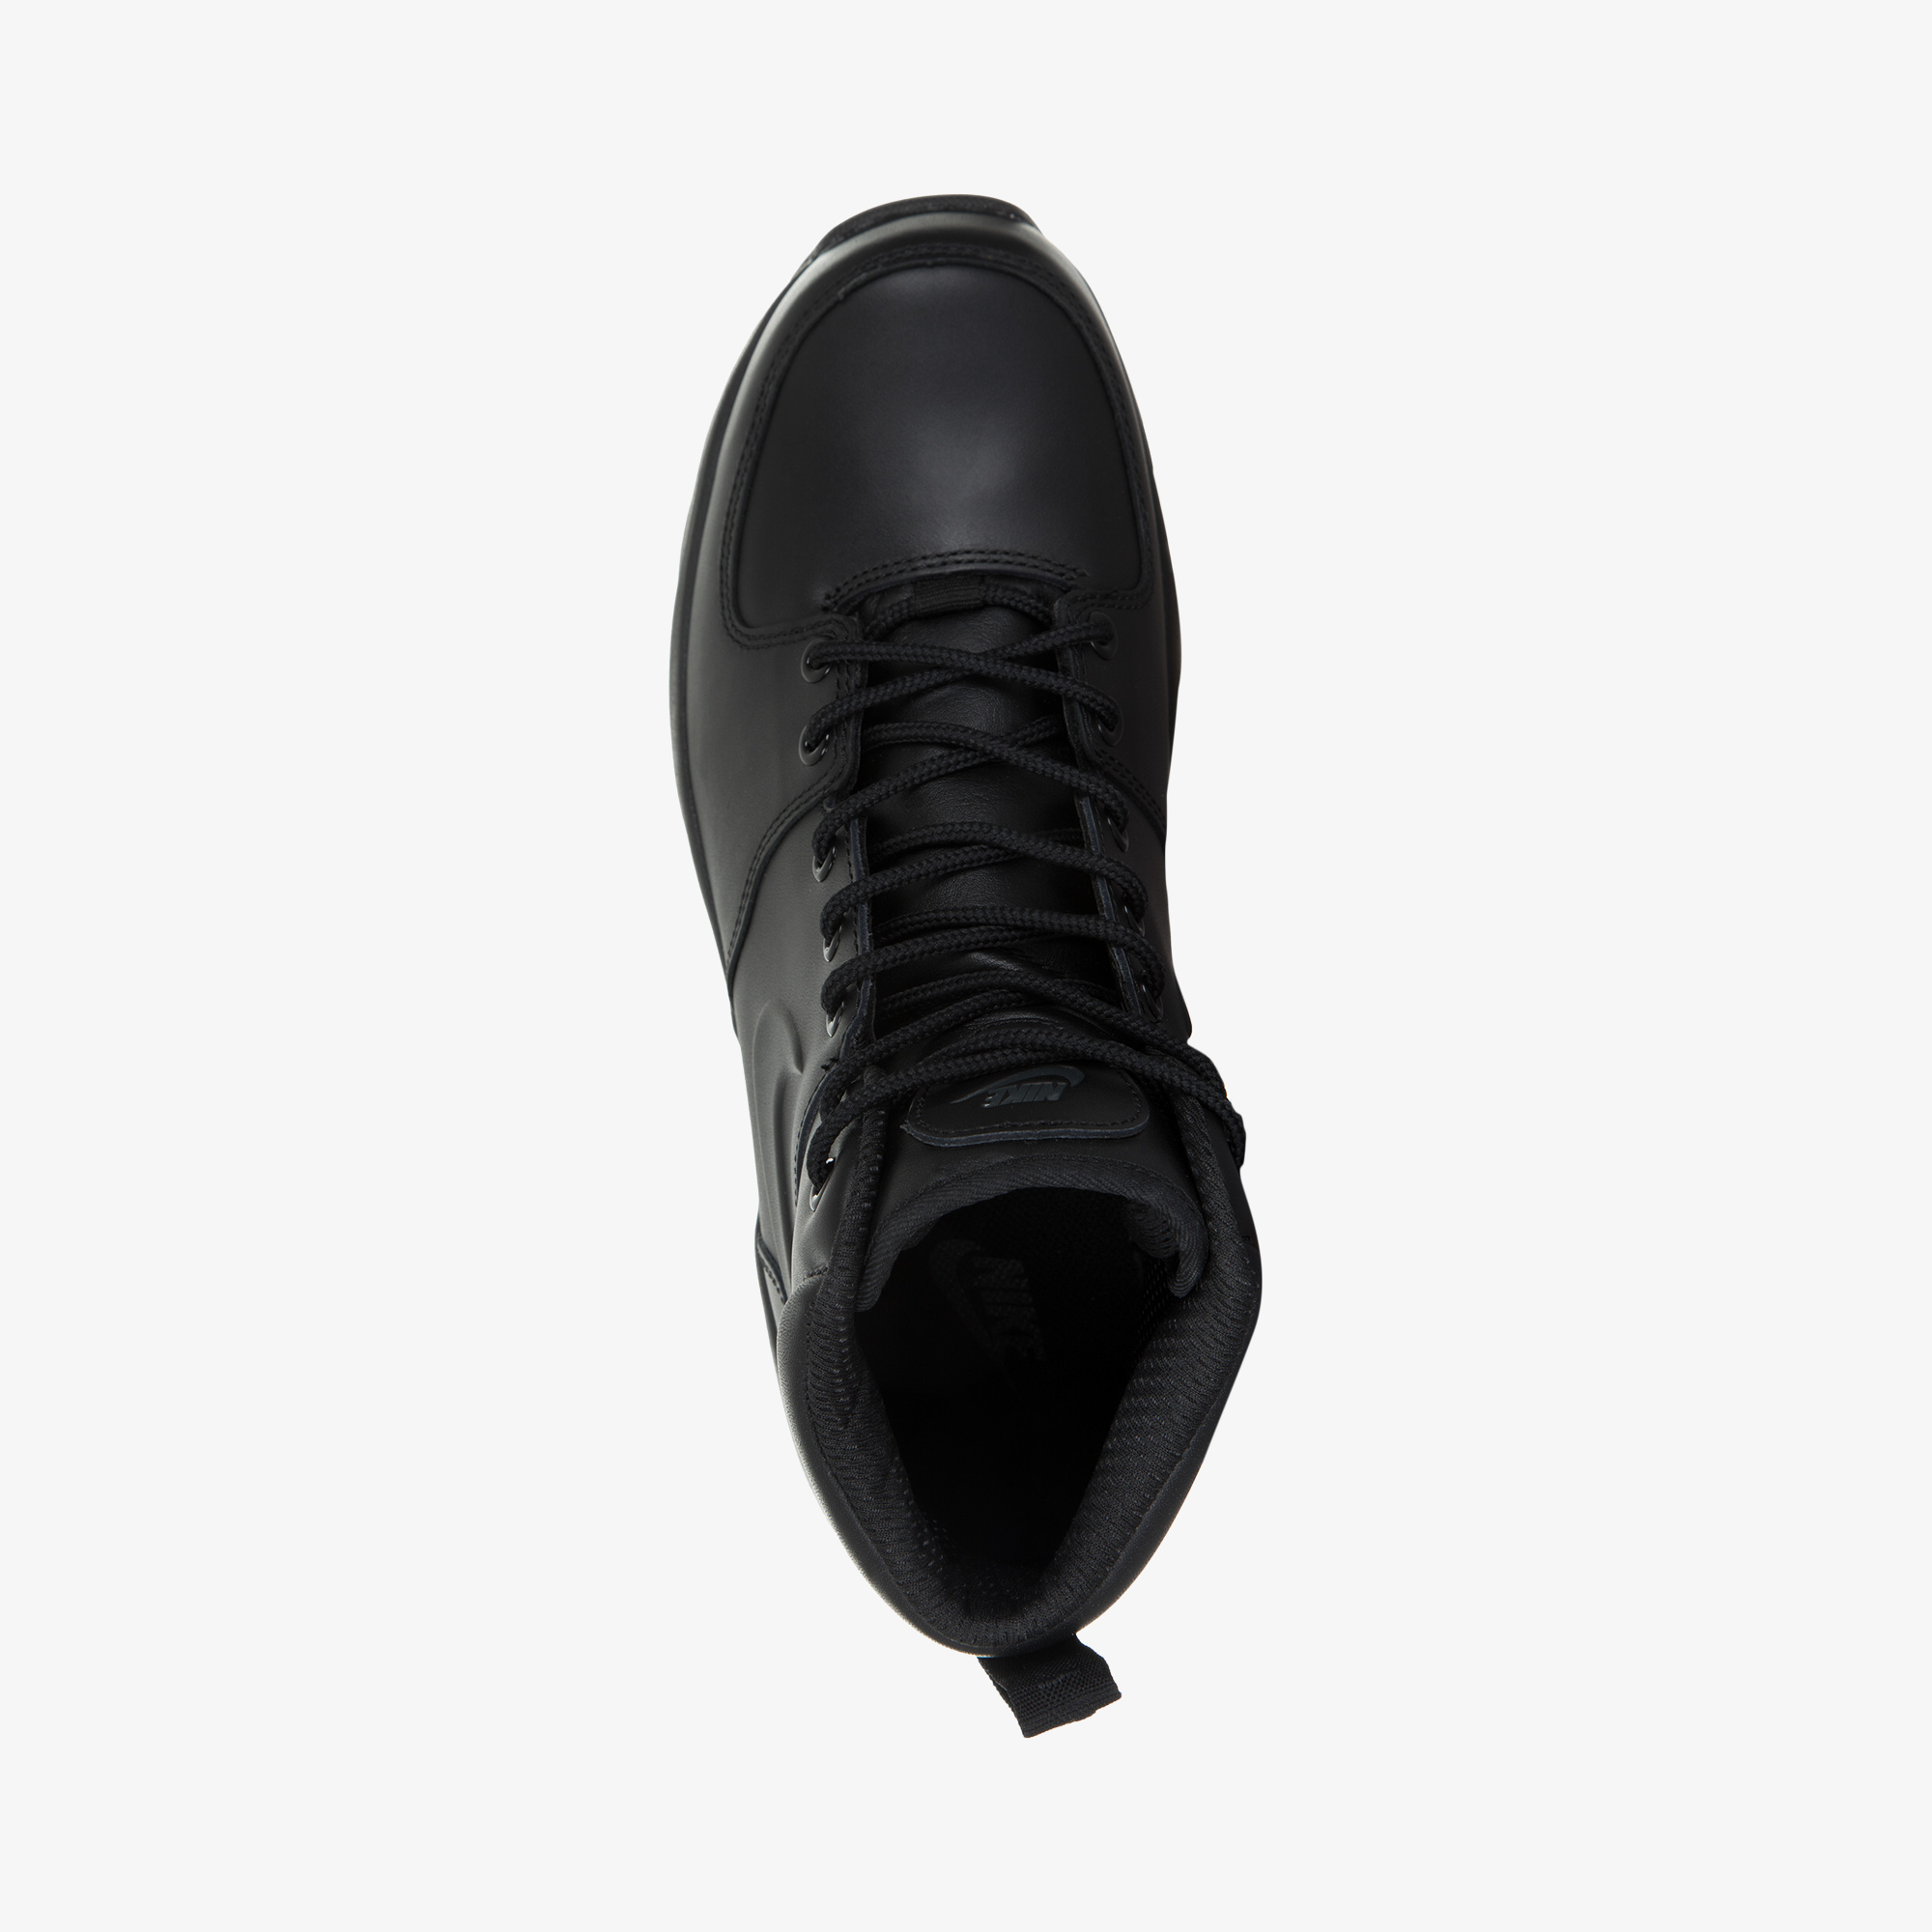 Ботинки Nike Nike Manoa Leather 454350-N06-003, размер Да, цвет черный 454350-003 - фото 3